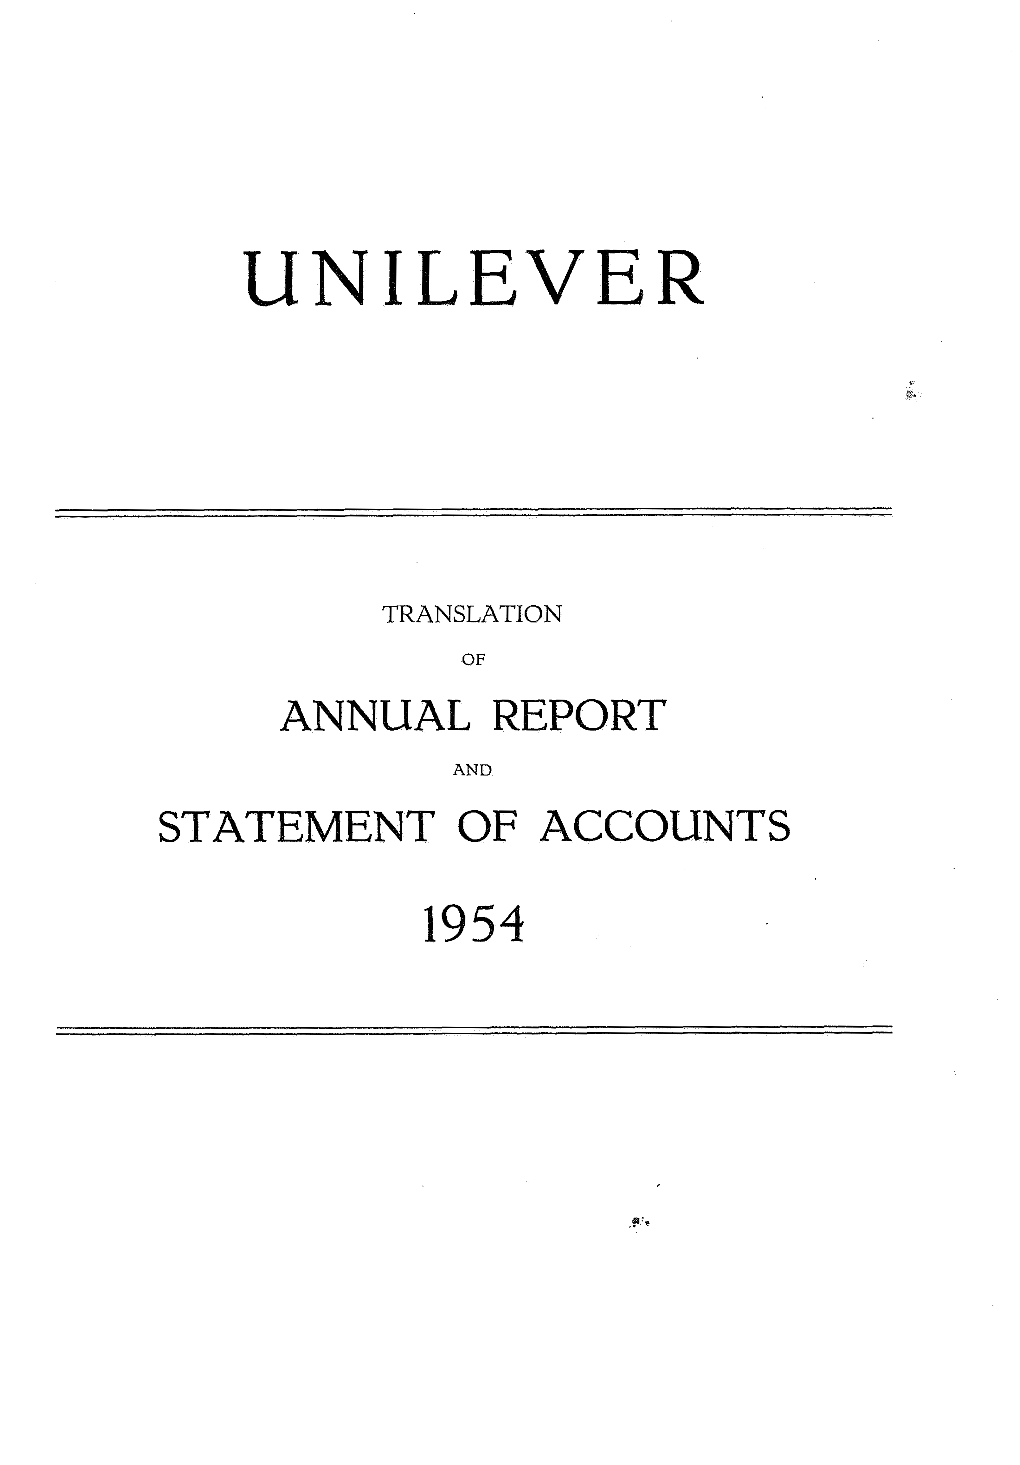 Unilever Annual Report 1954